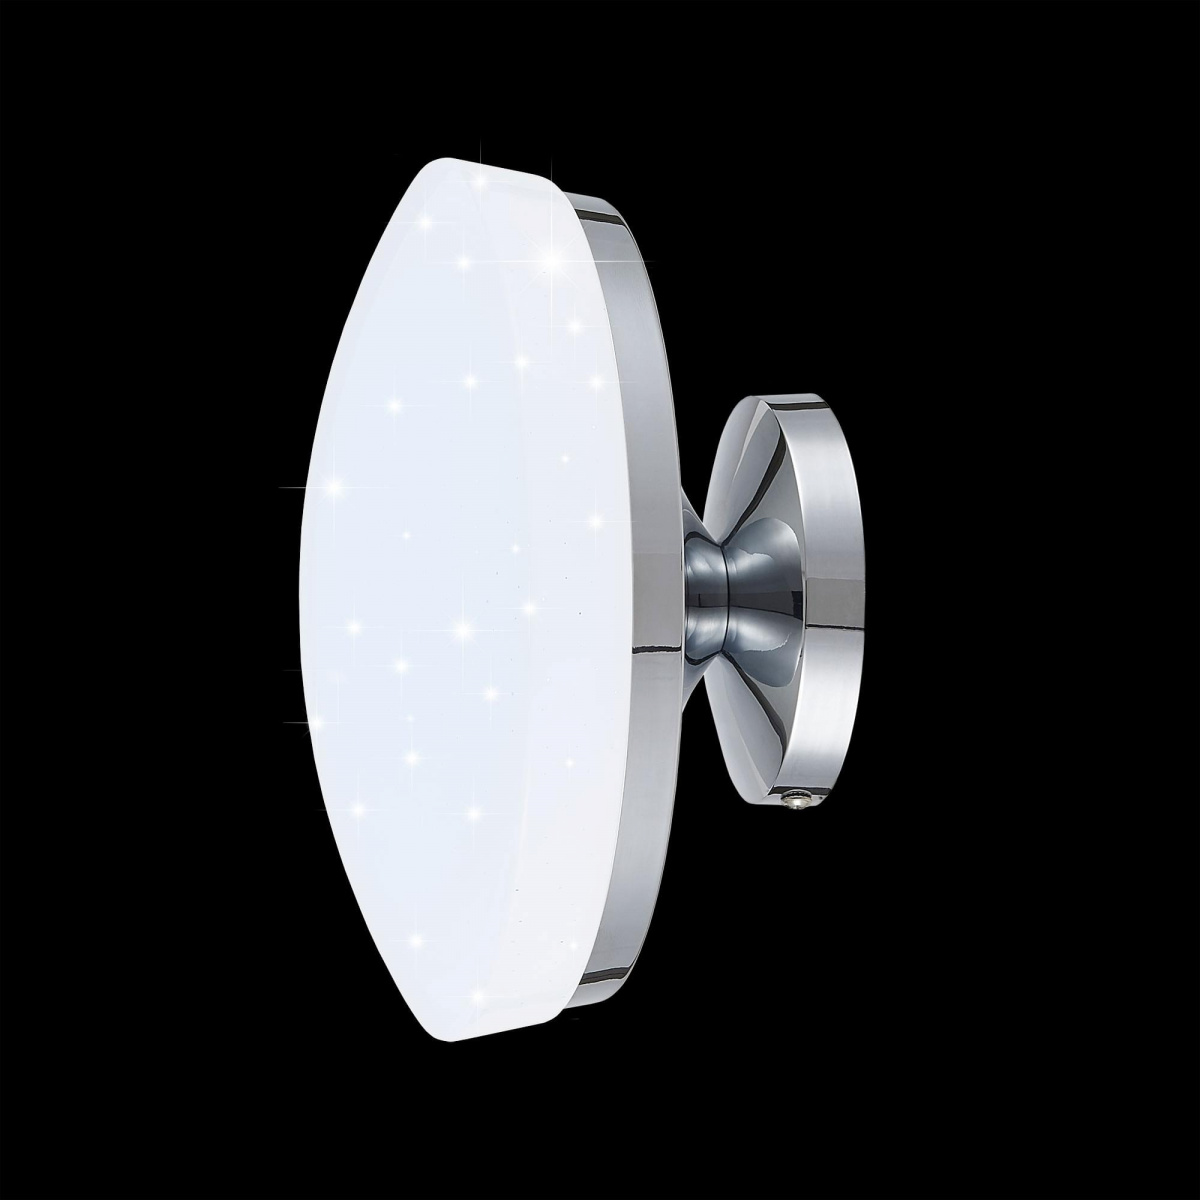 светильник накладной citilux тамбо (tambo), артикул CL716011Nz